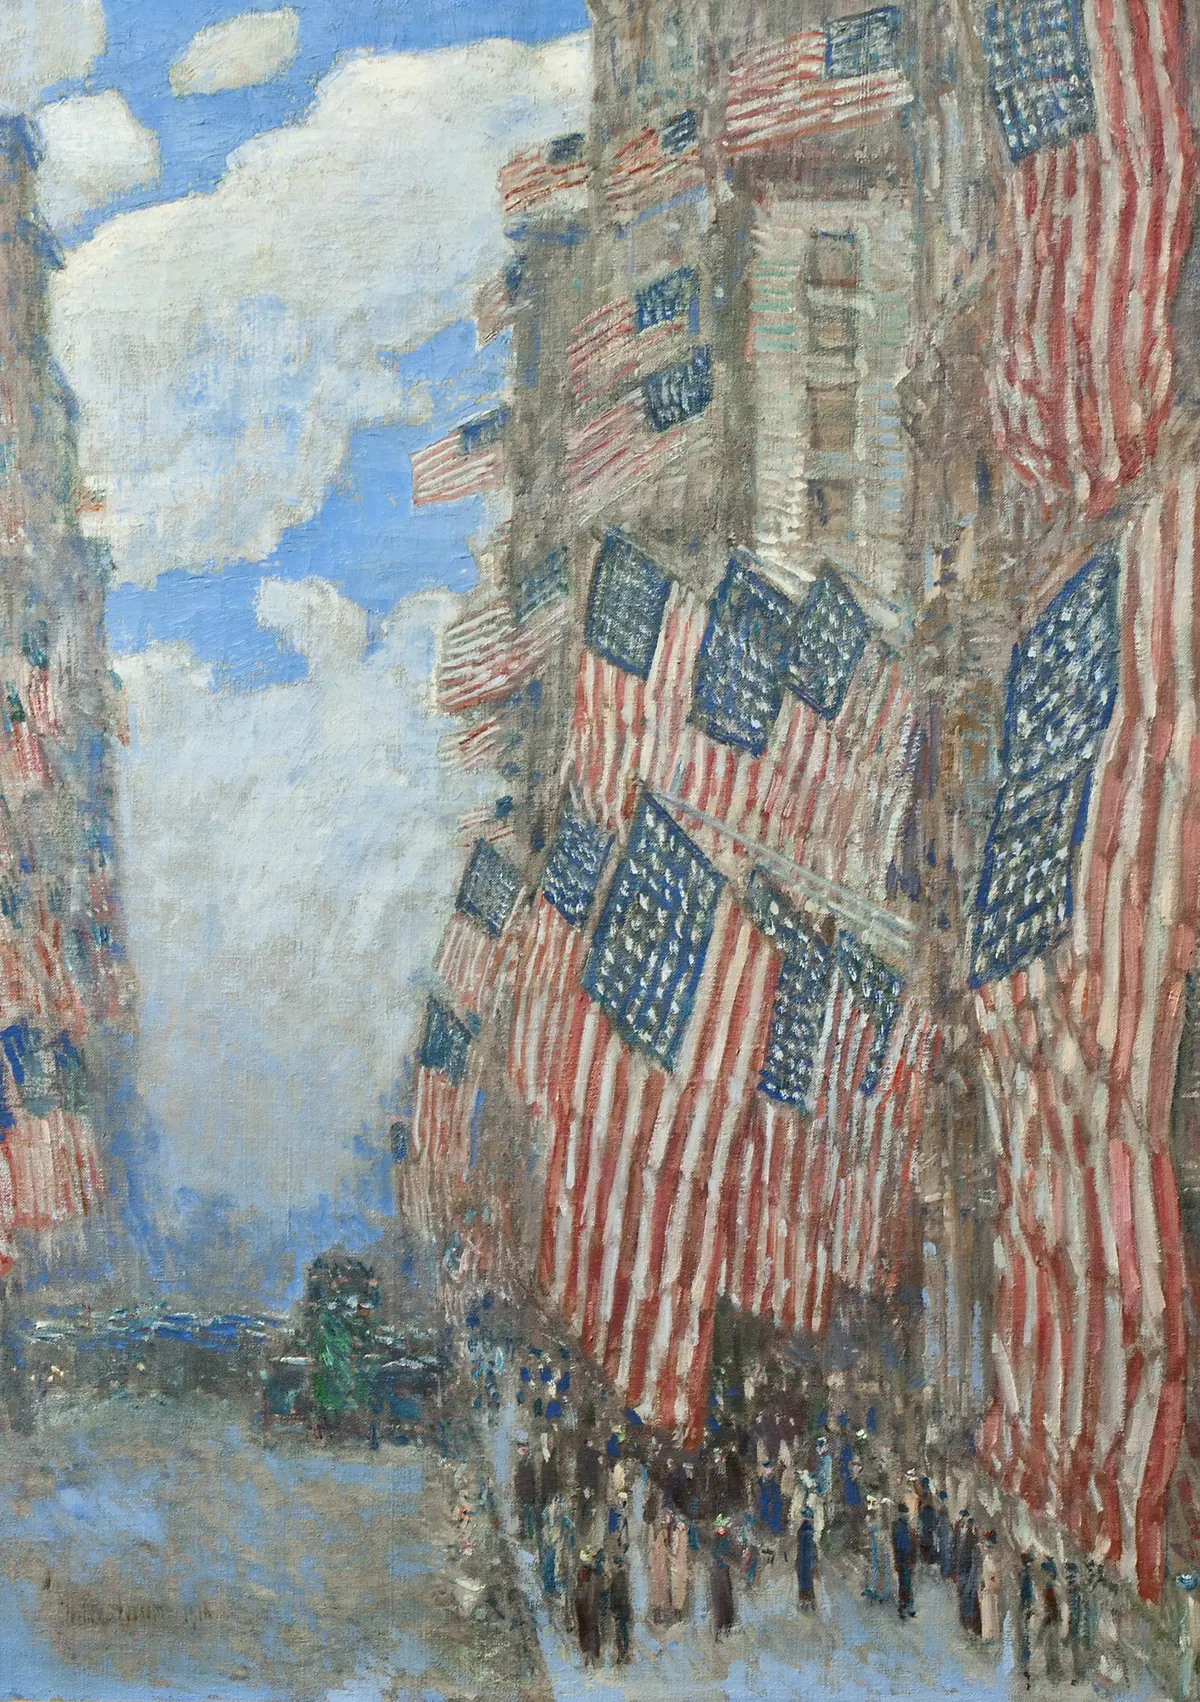 Der Vierte Juli 1916 by Frederick Childe Hassam - 1916 - 91,4 × 66,7 cm New York Historical Society